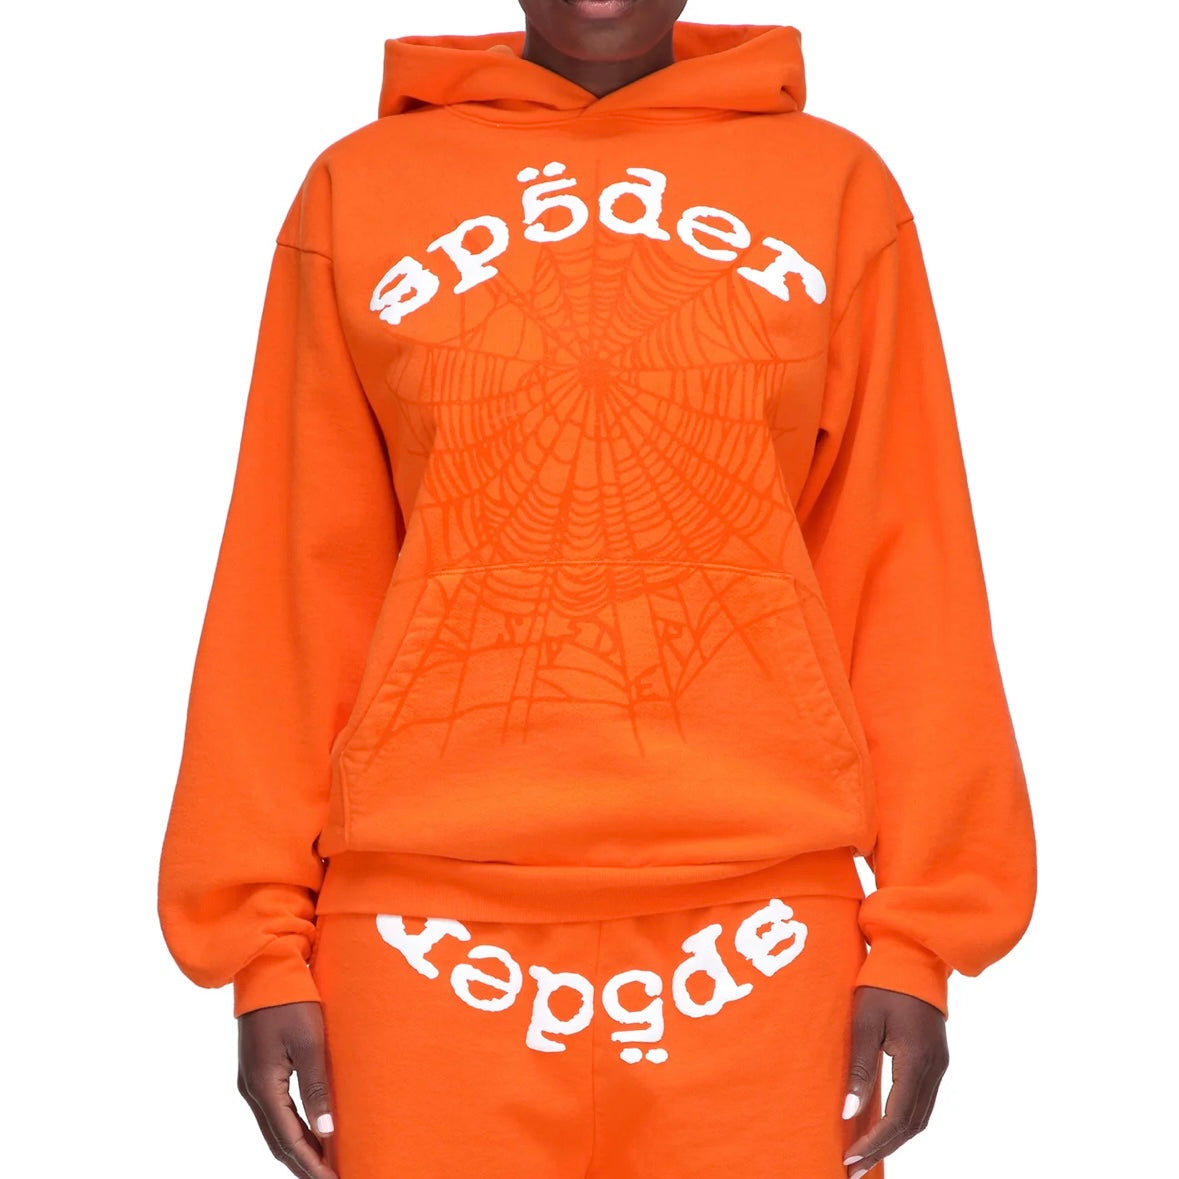 Sp5der Orange White Legacy Hoodie On Body Front Female